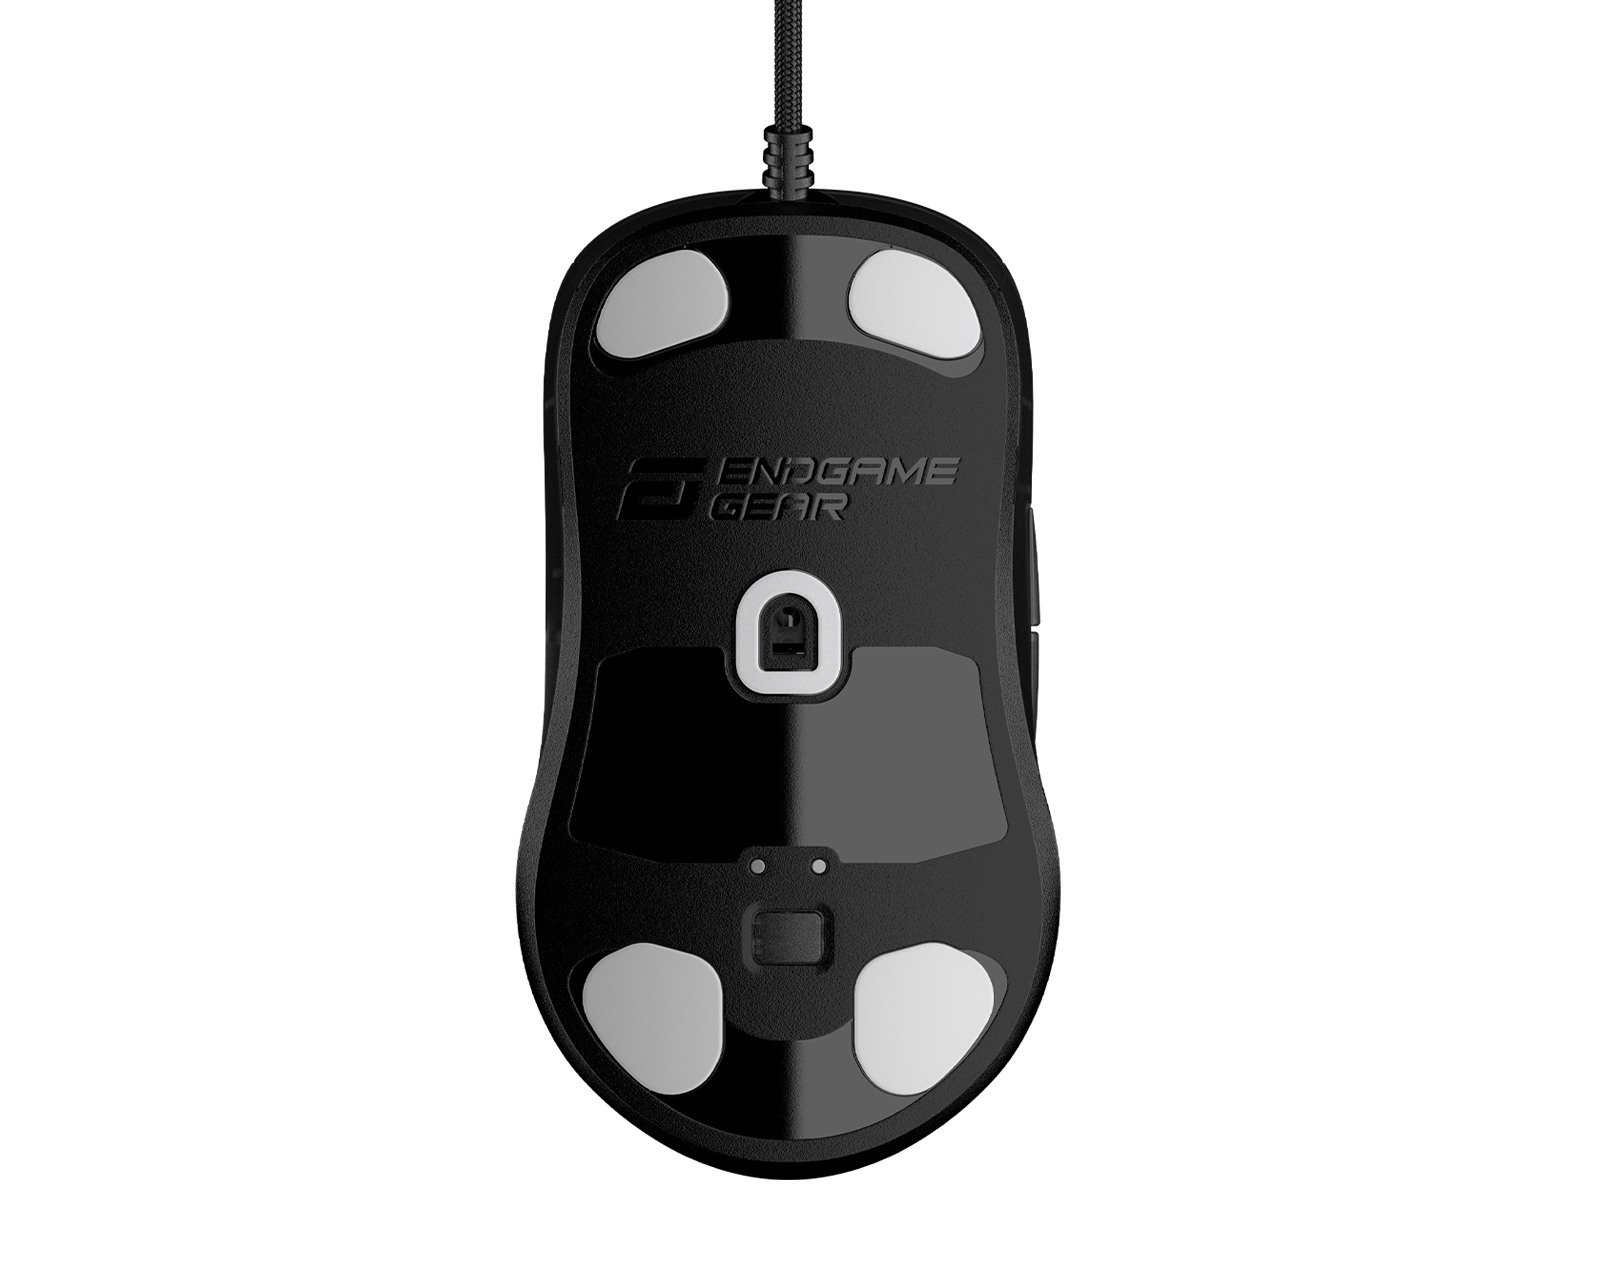 Buy Endgame Gear Xm1r Gaming Mouse Dark Frost At Maxgaming Com